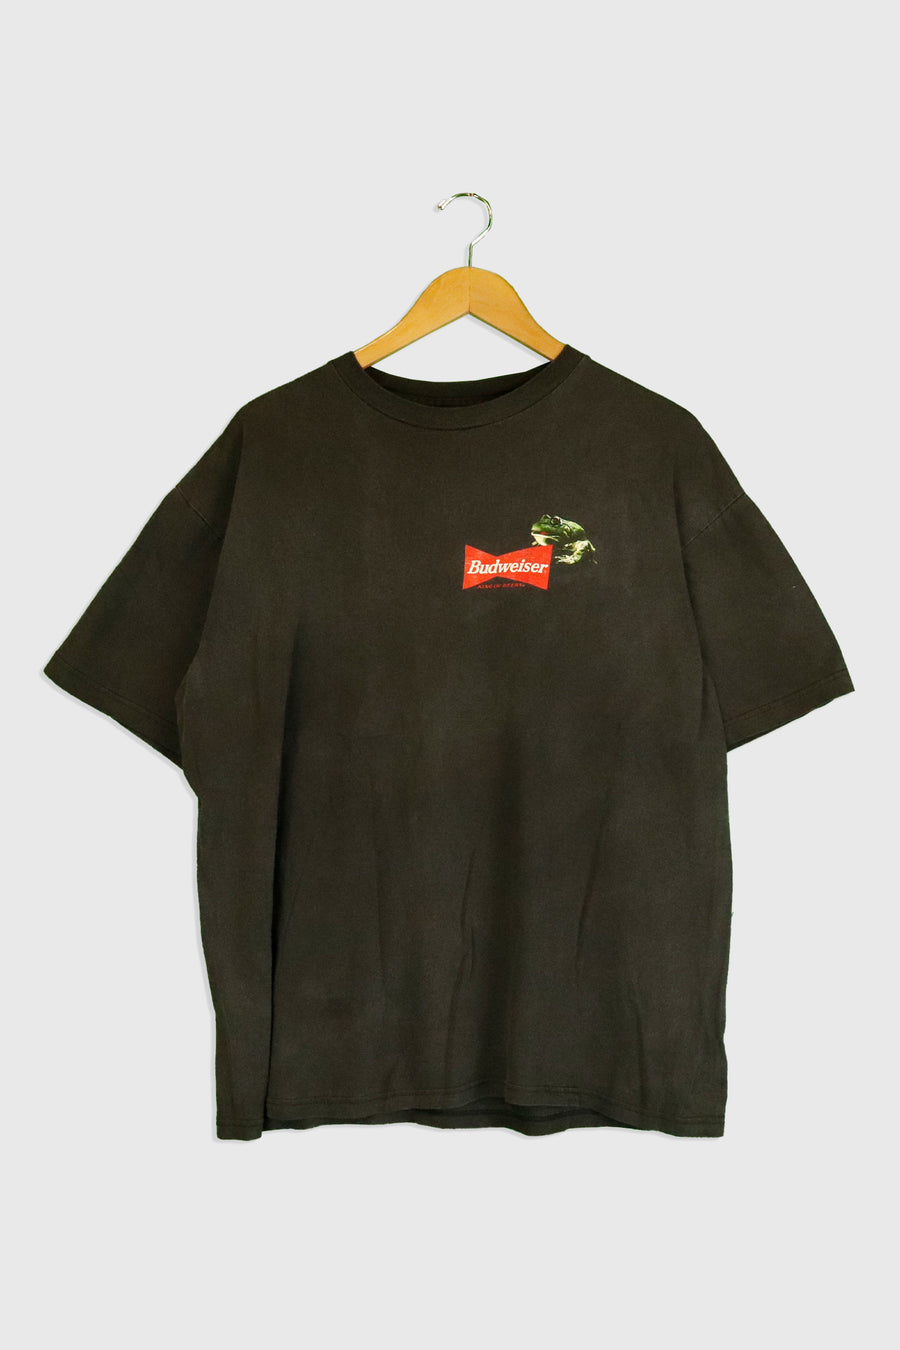 Vintage 1995 Budweiser Frog T Shirt Sz L